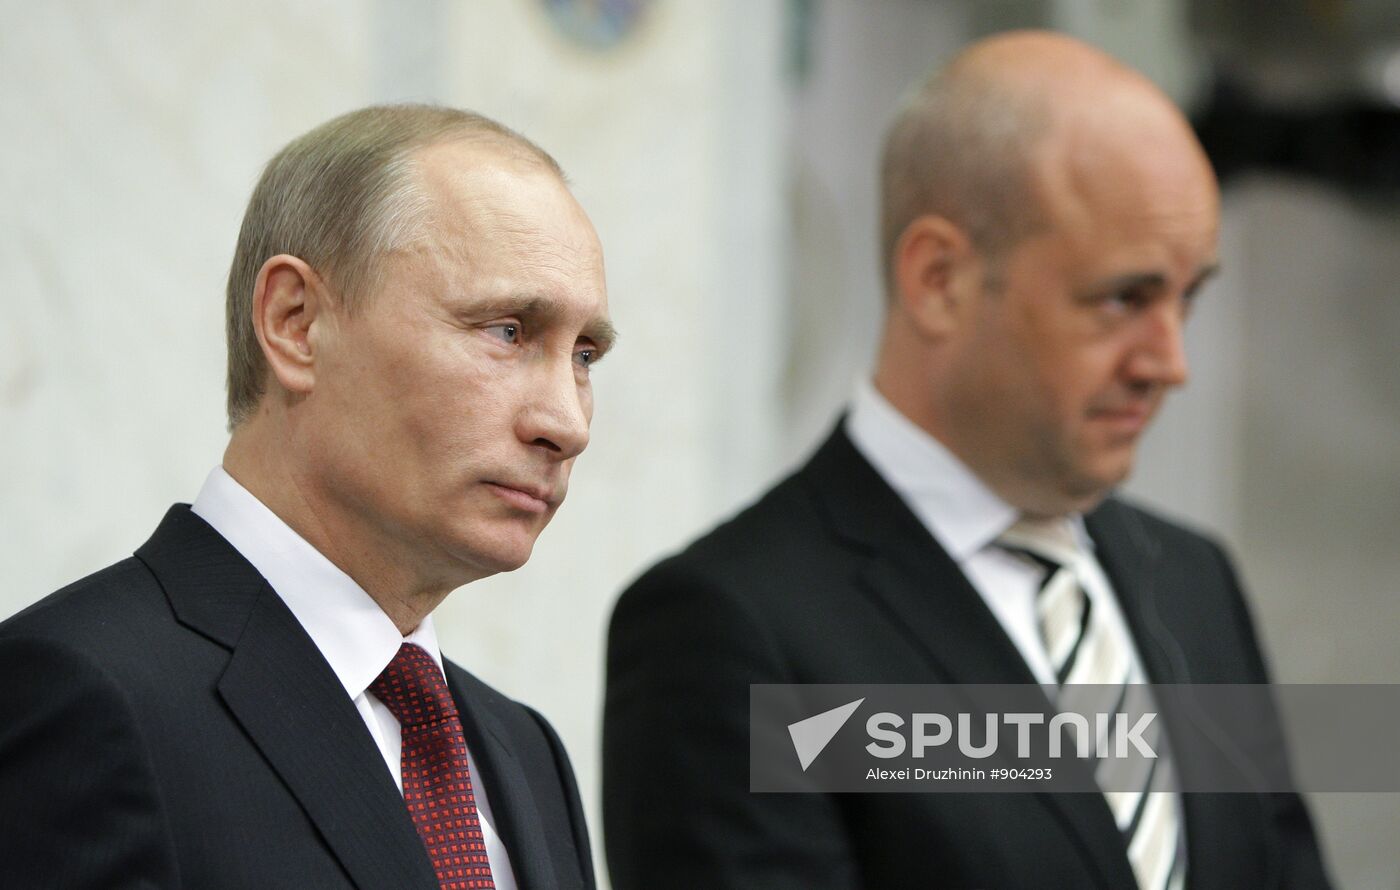 Russian Prime Minister Vladimir Putin visits Stockholm